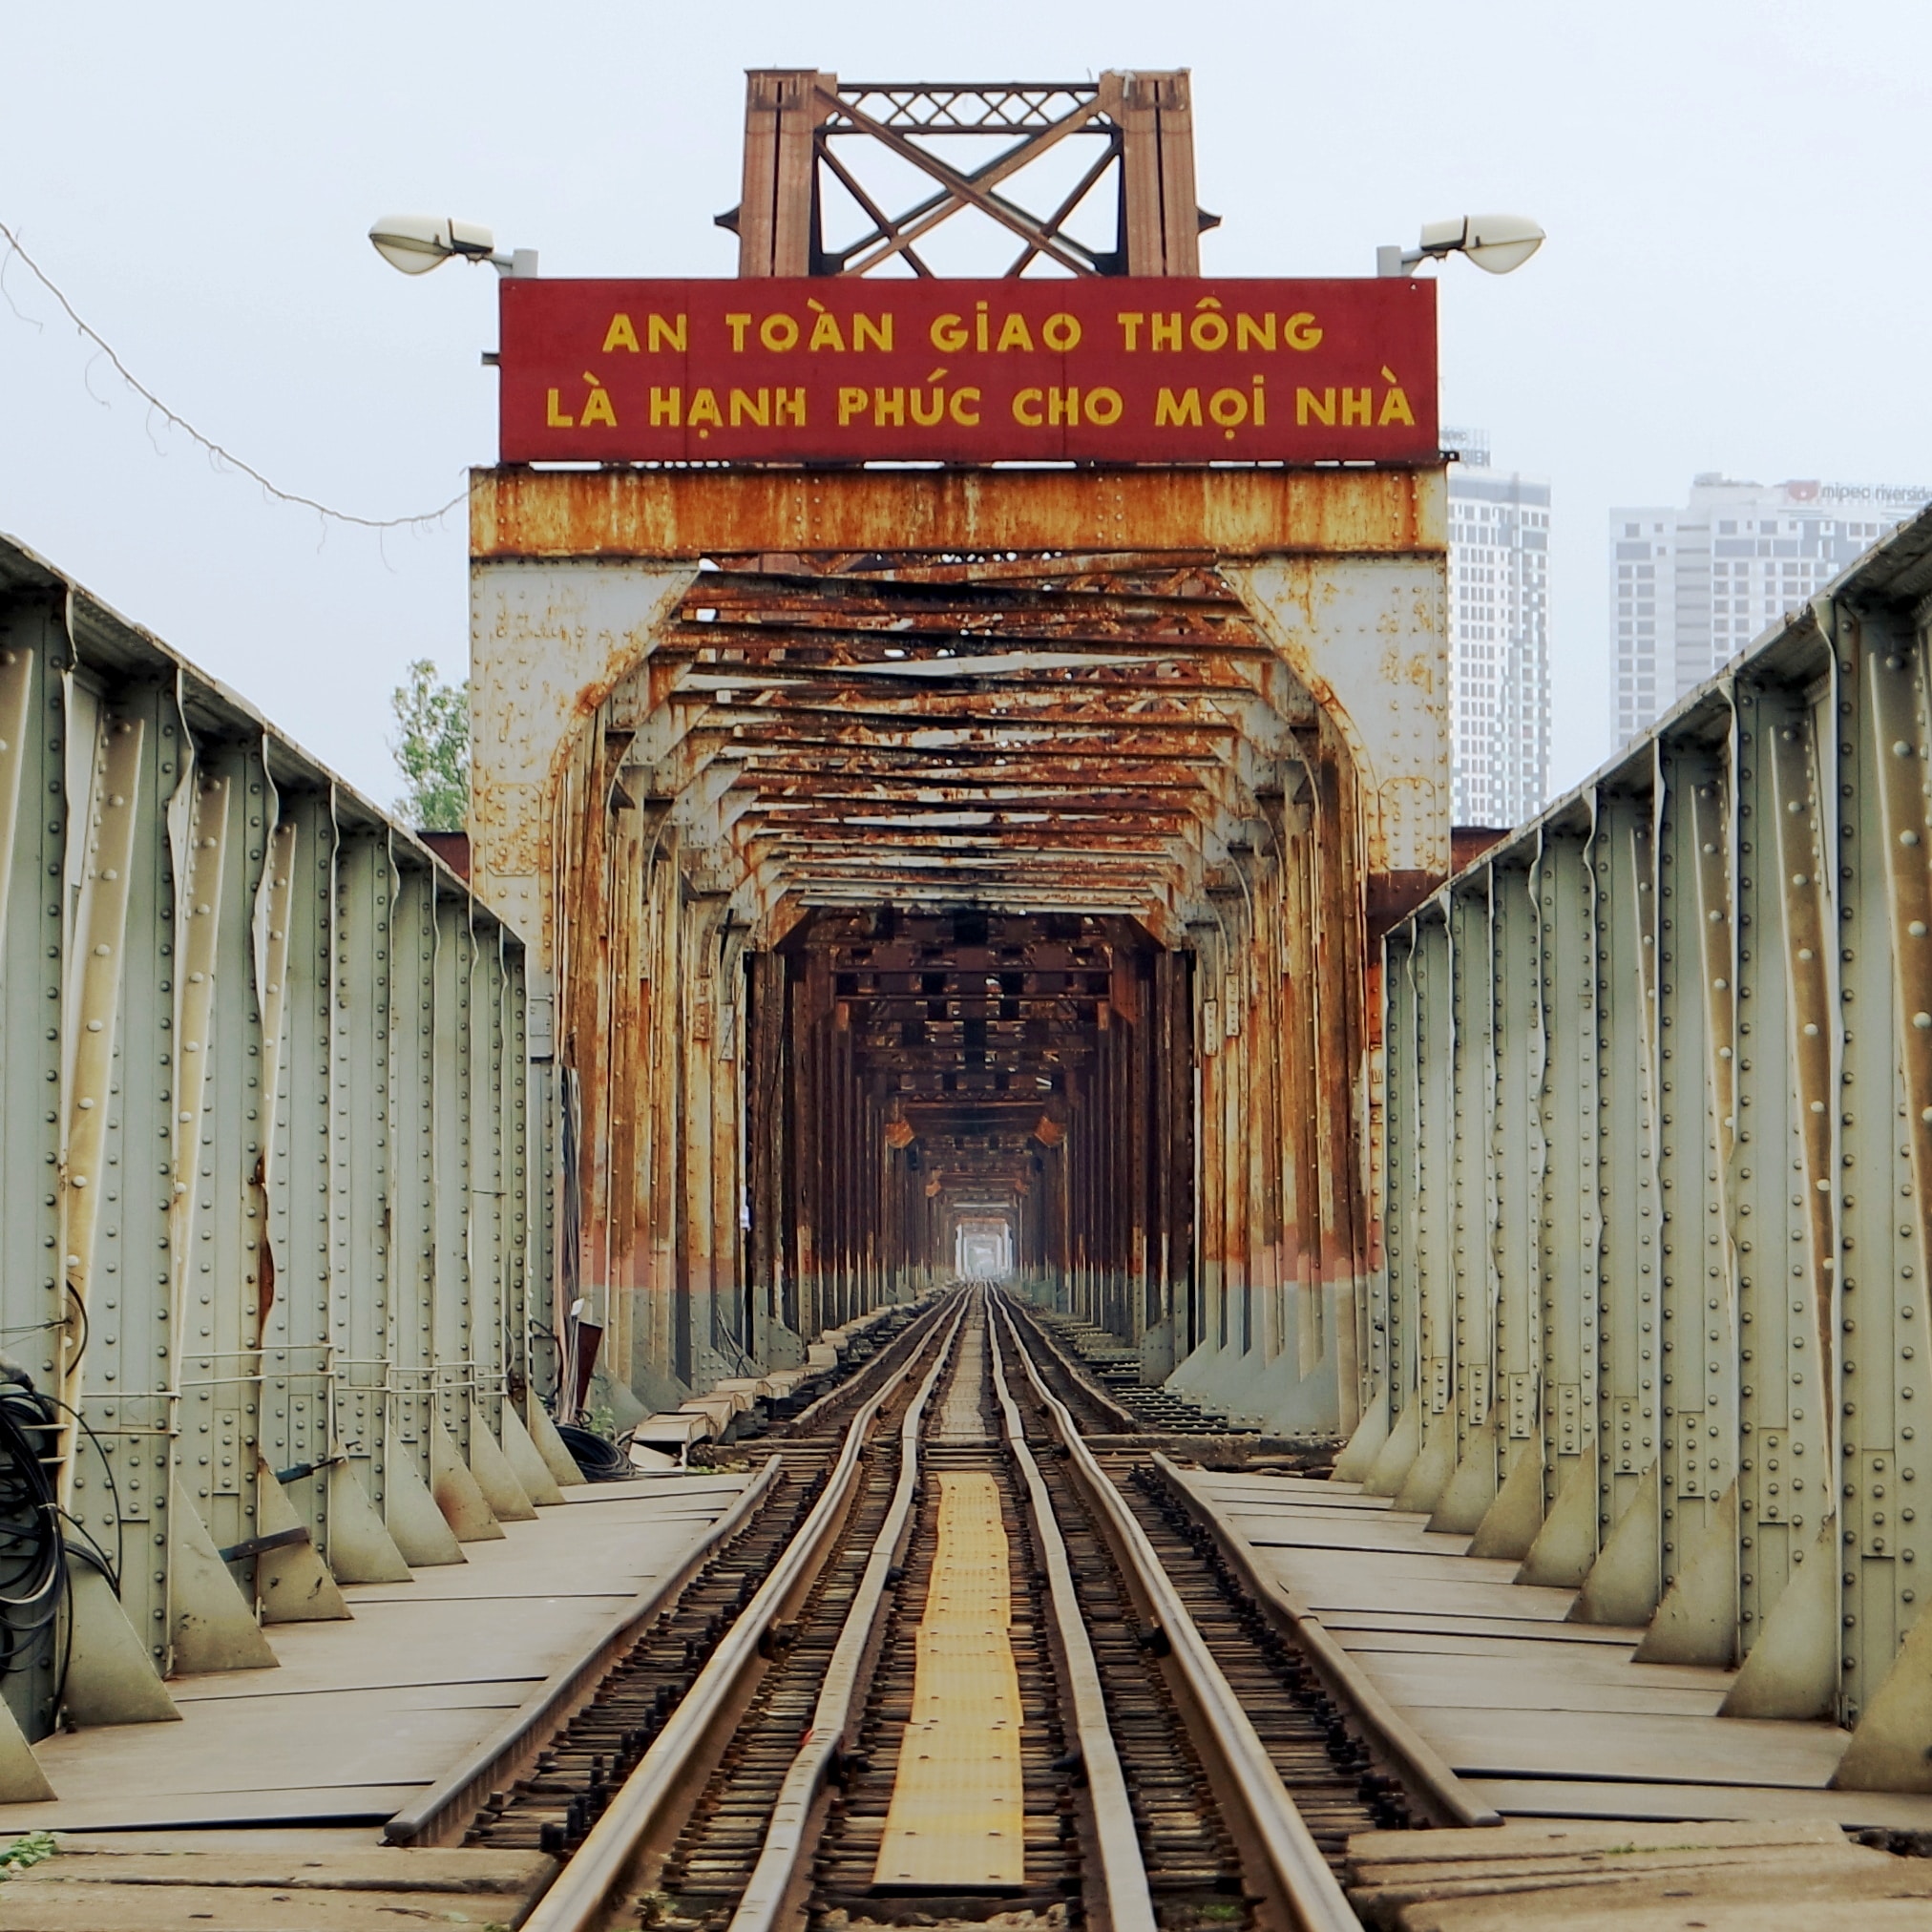 trains in vietnam by trains